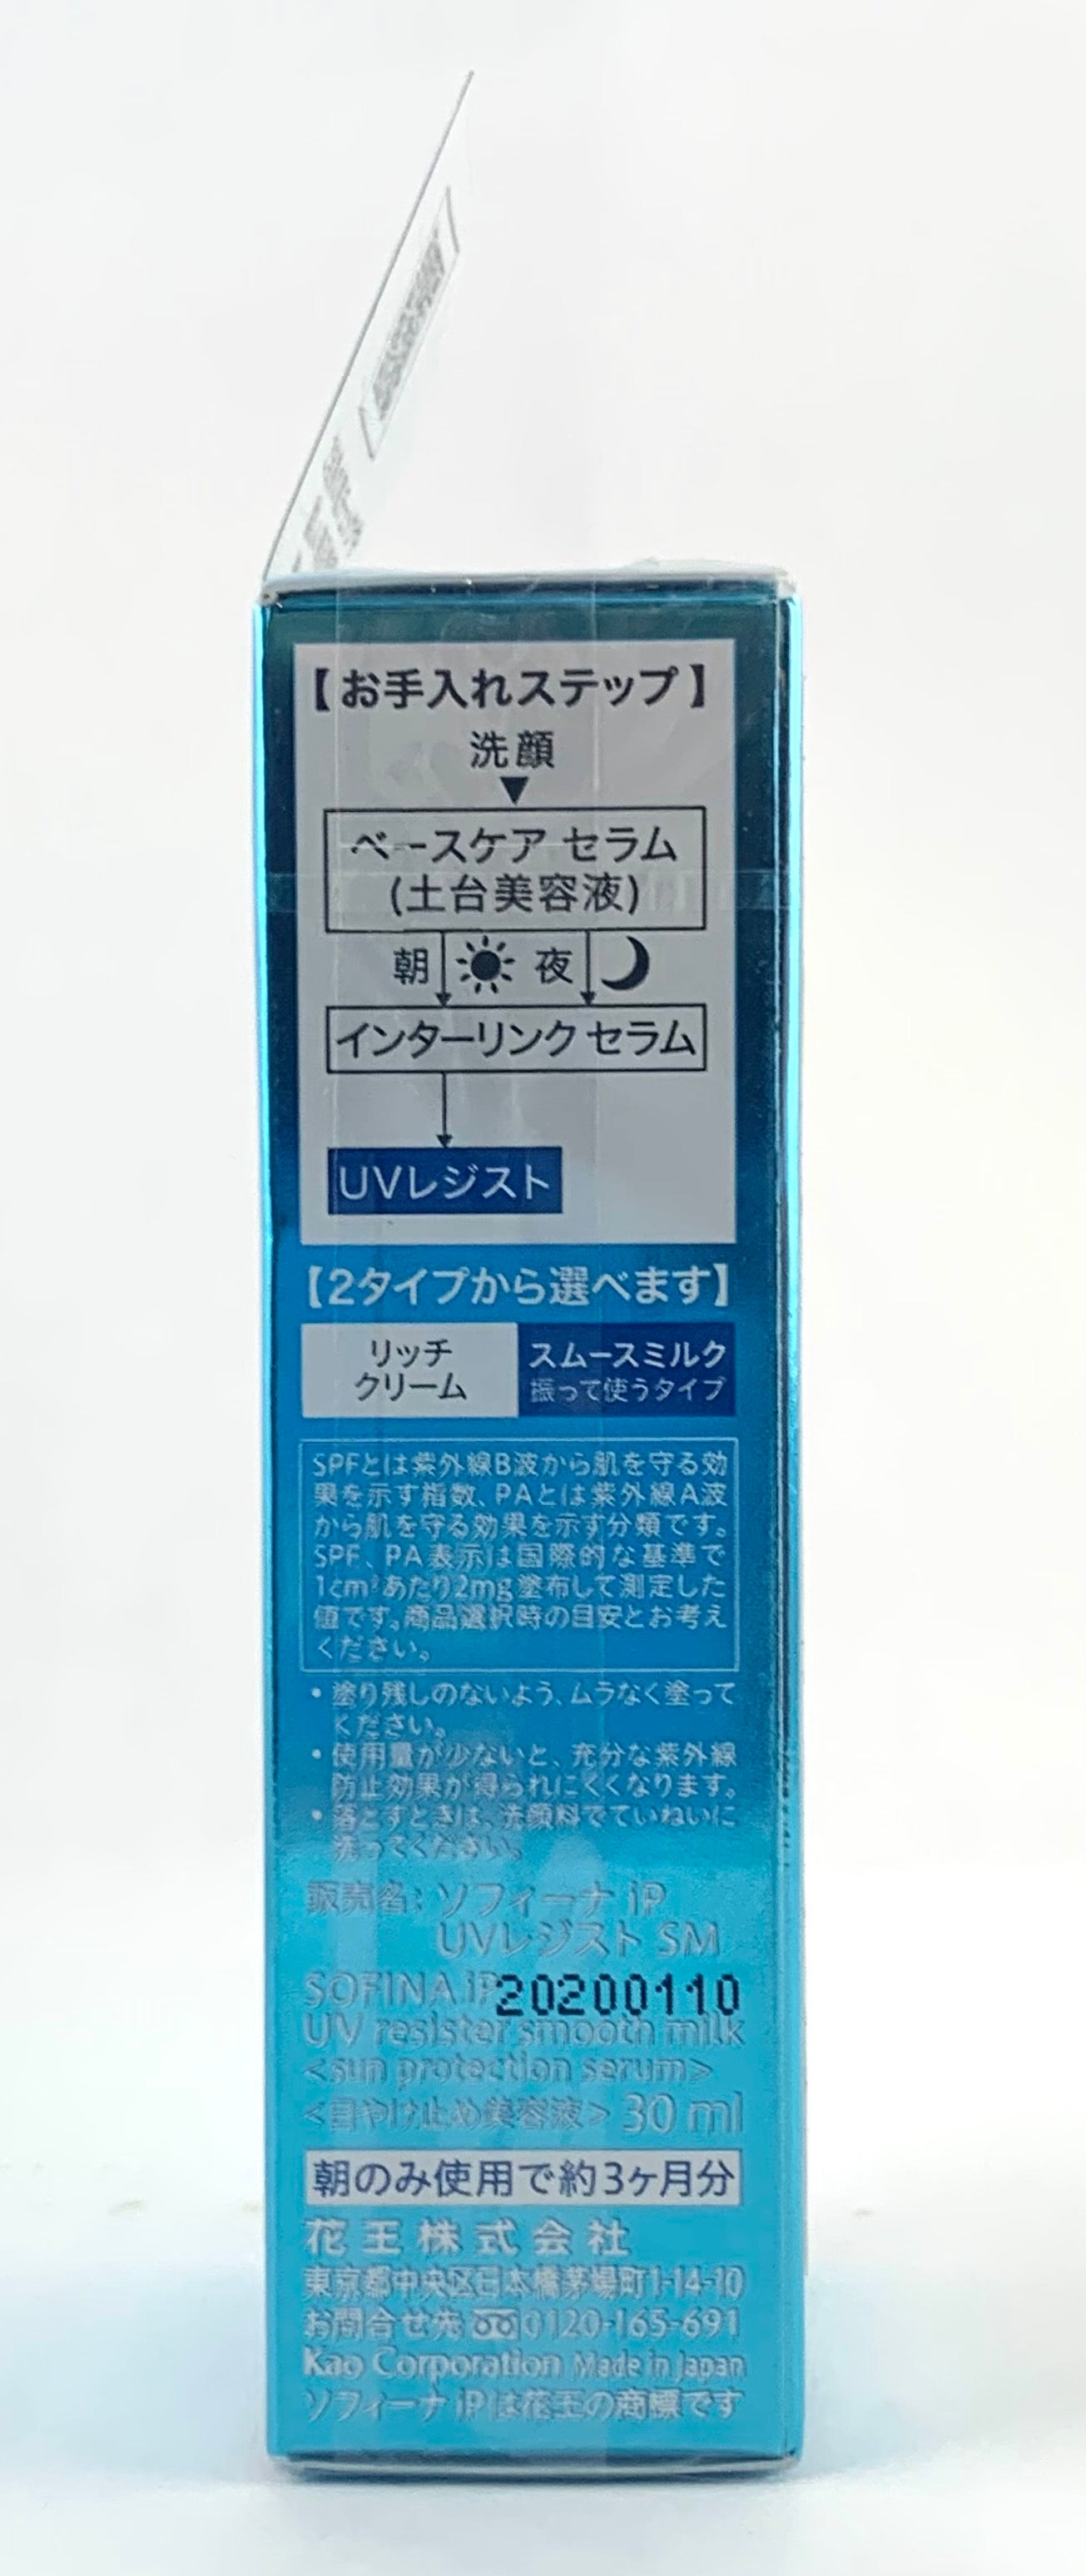 Sofina iP UV Resister Smooth Milk/Rich Cream SPF50+ PA++++ 30ml,30g.